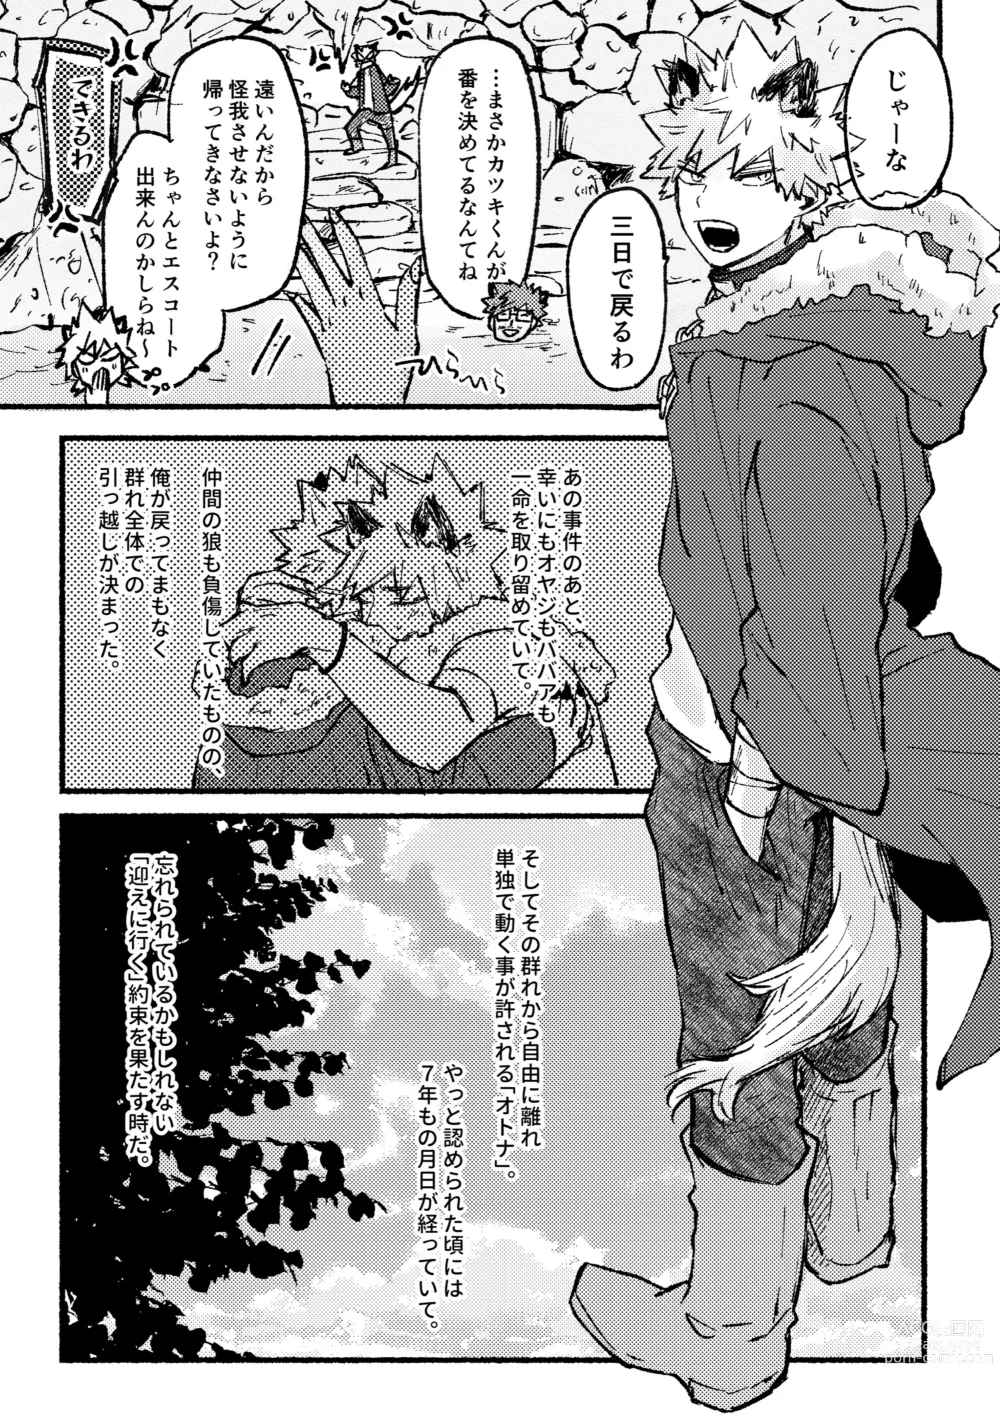 Page 18 of doujinshi Monopolize - You